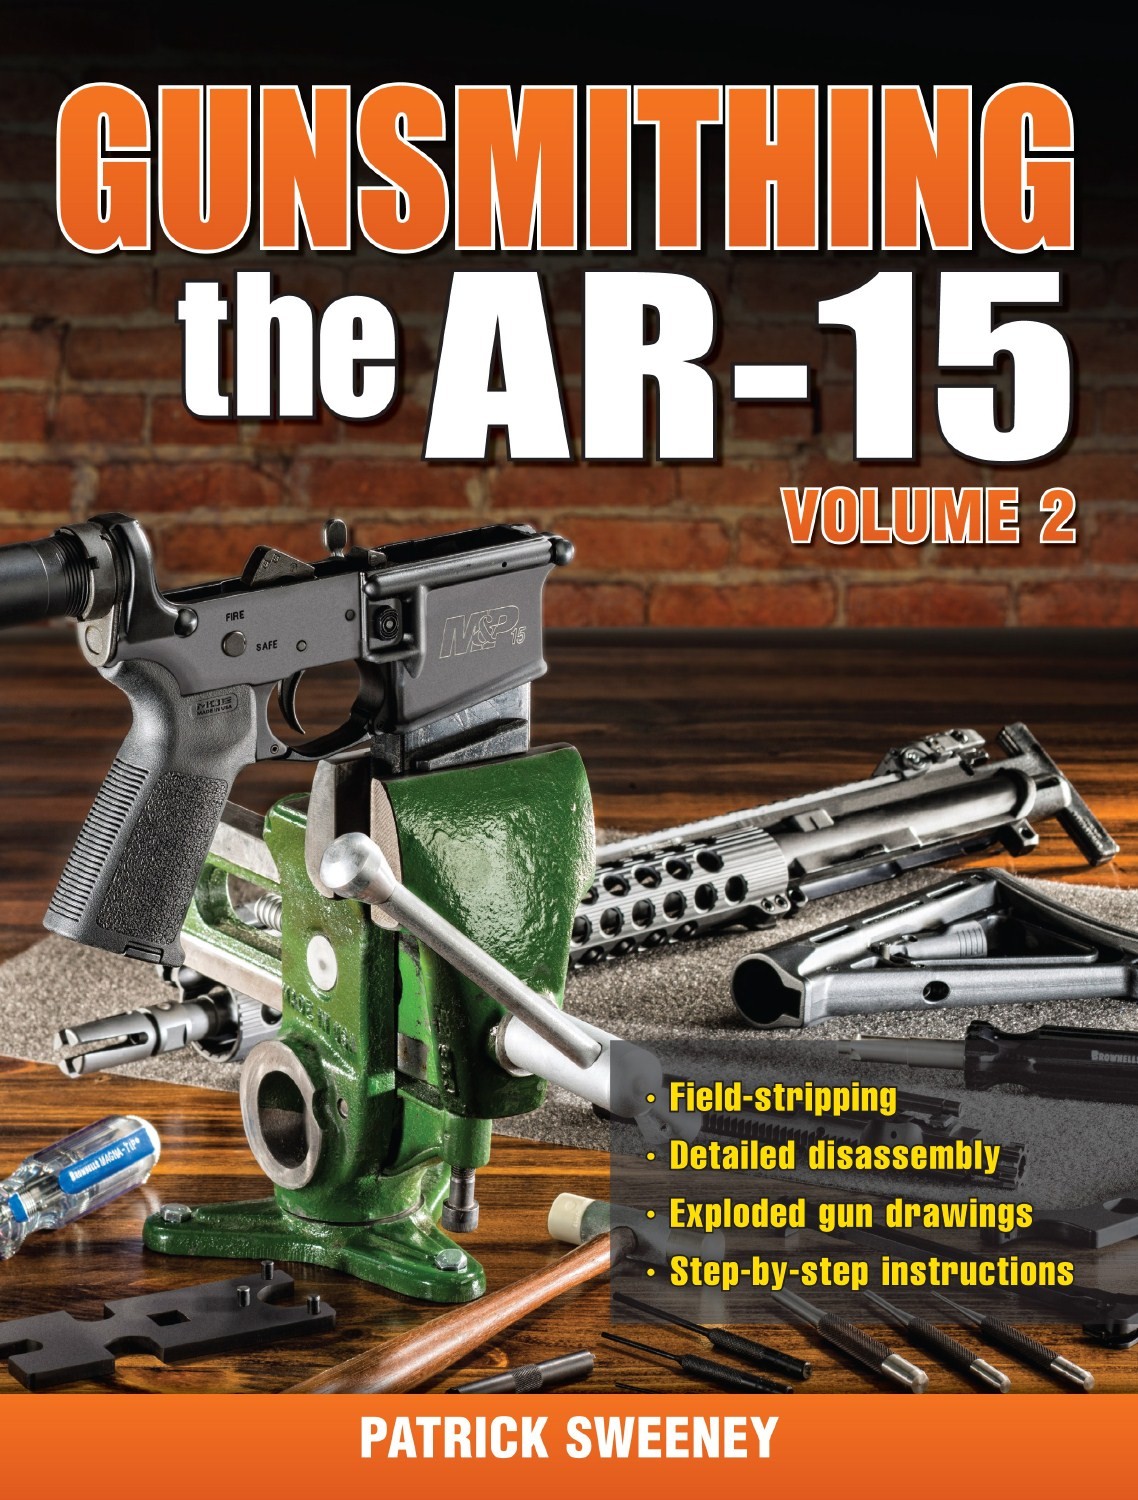 Gunsmithing the AR-15 Vol. 2